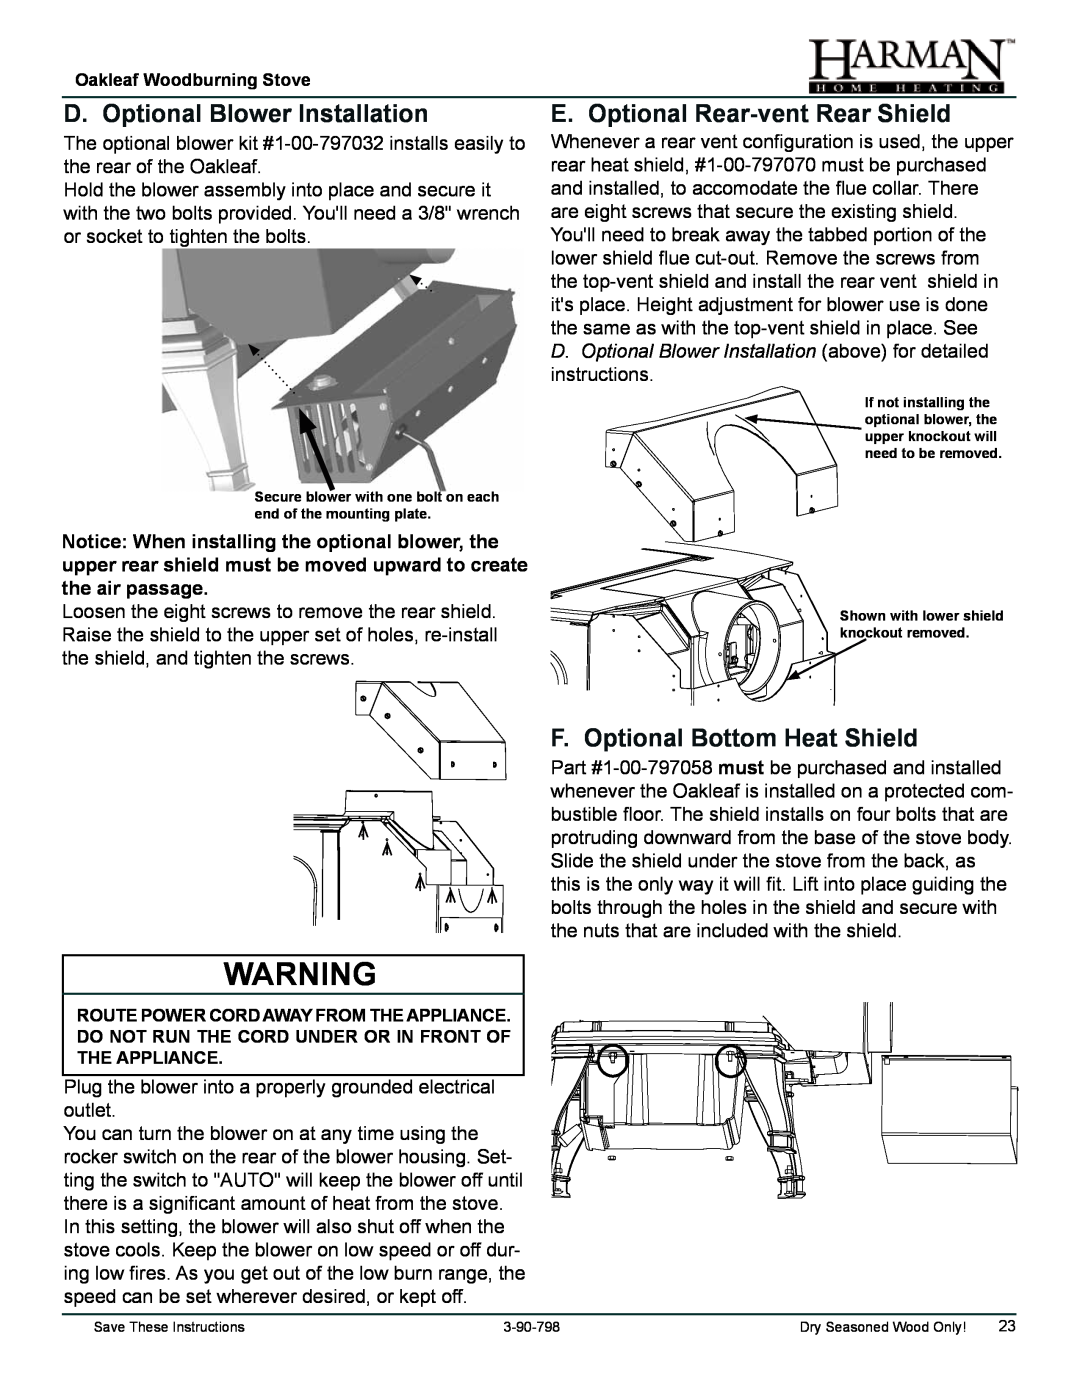 Harman Stove Company 1-90-797000 manual D. Optional Blower Installation, E. Optional Rear-ventRear Shield 